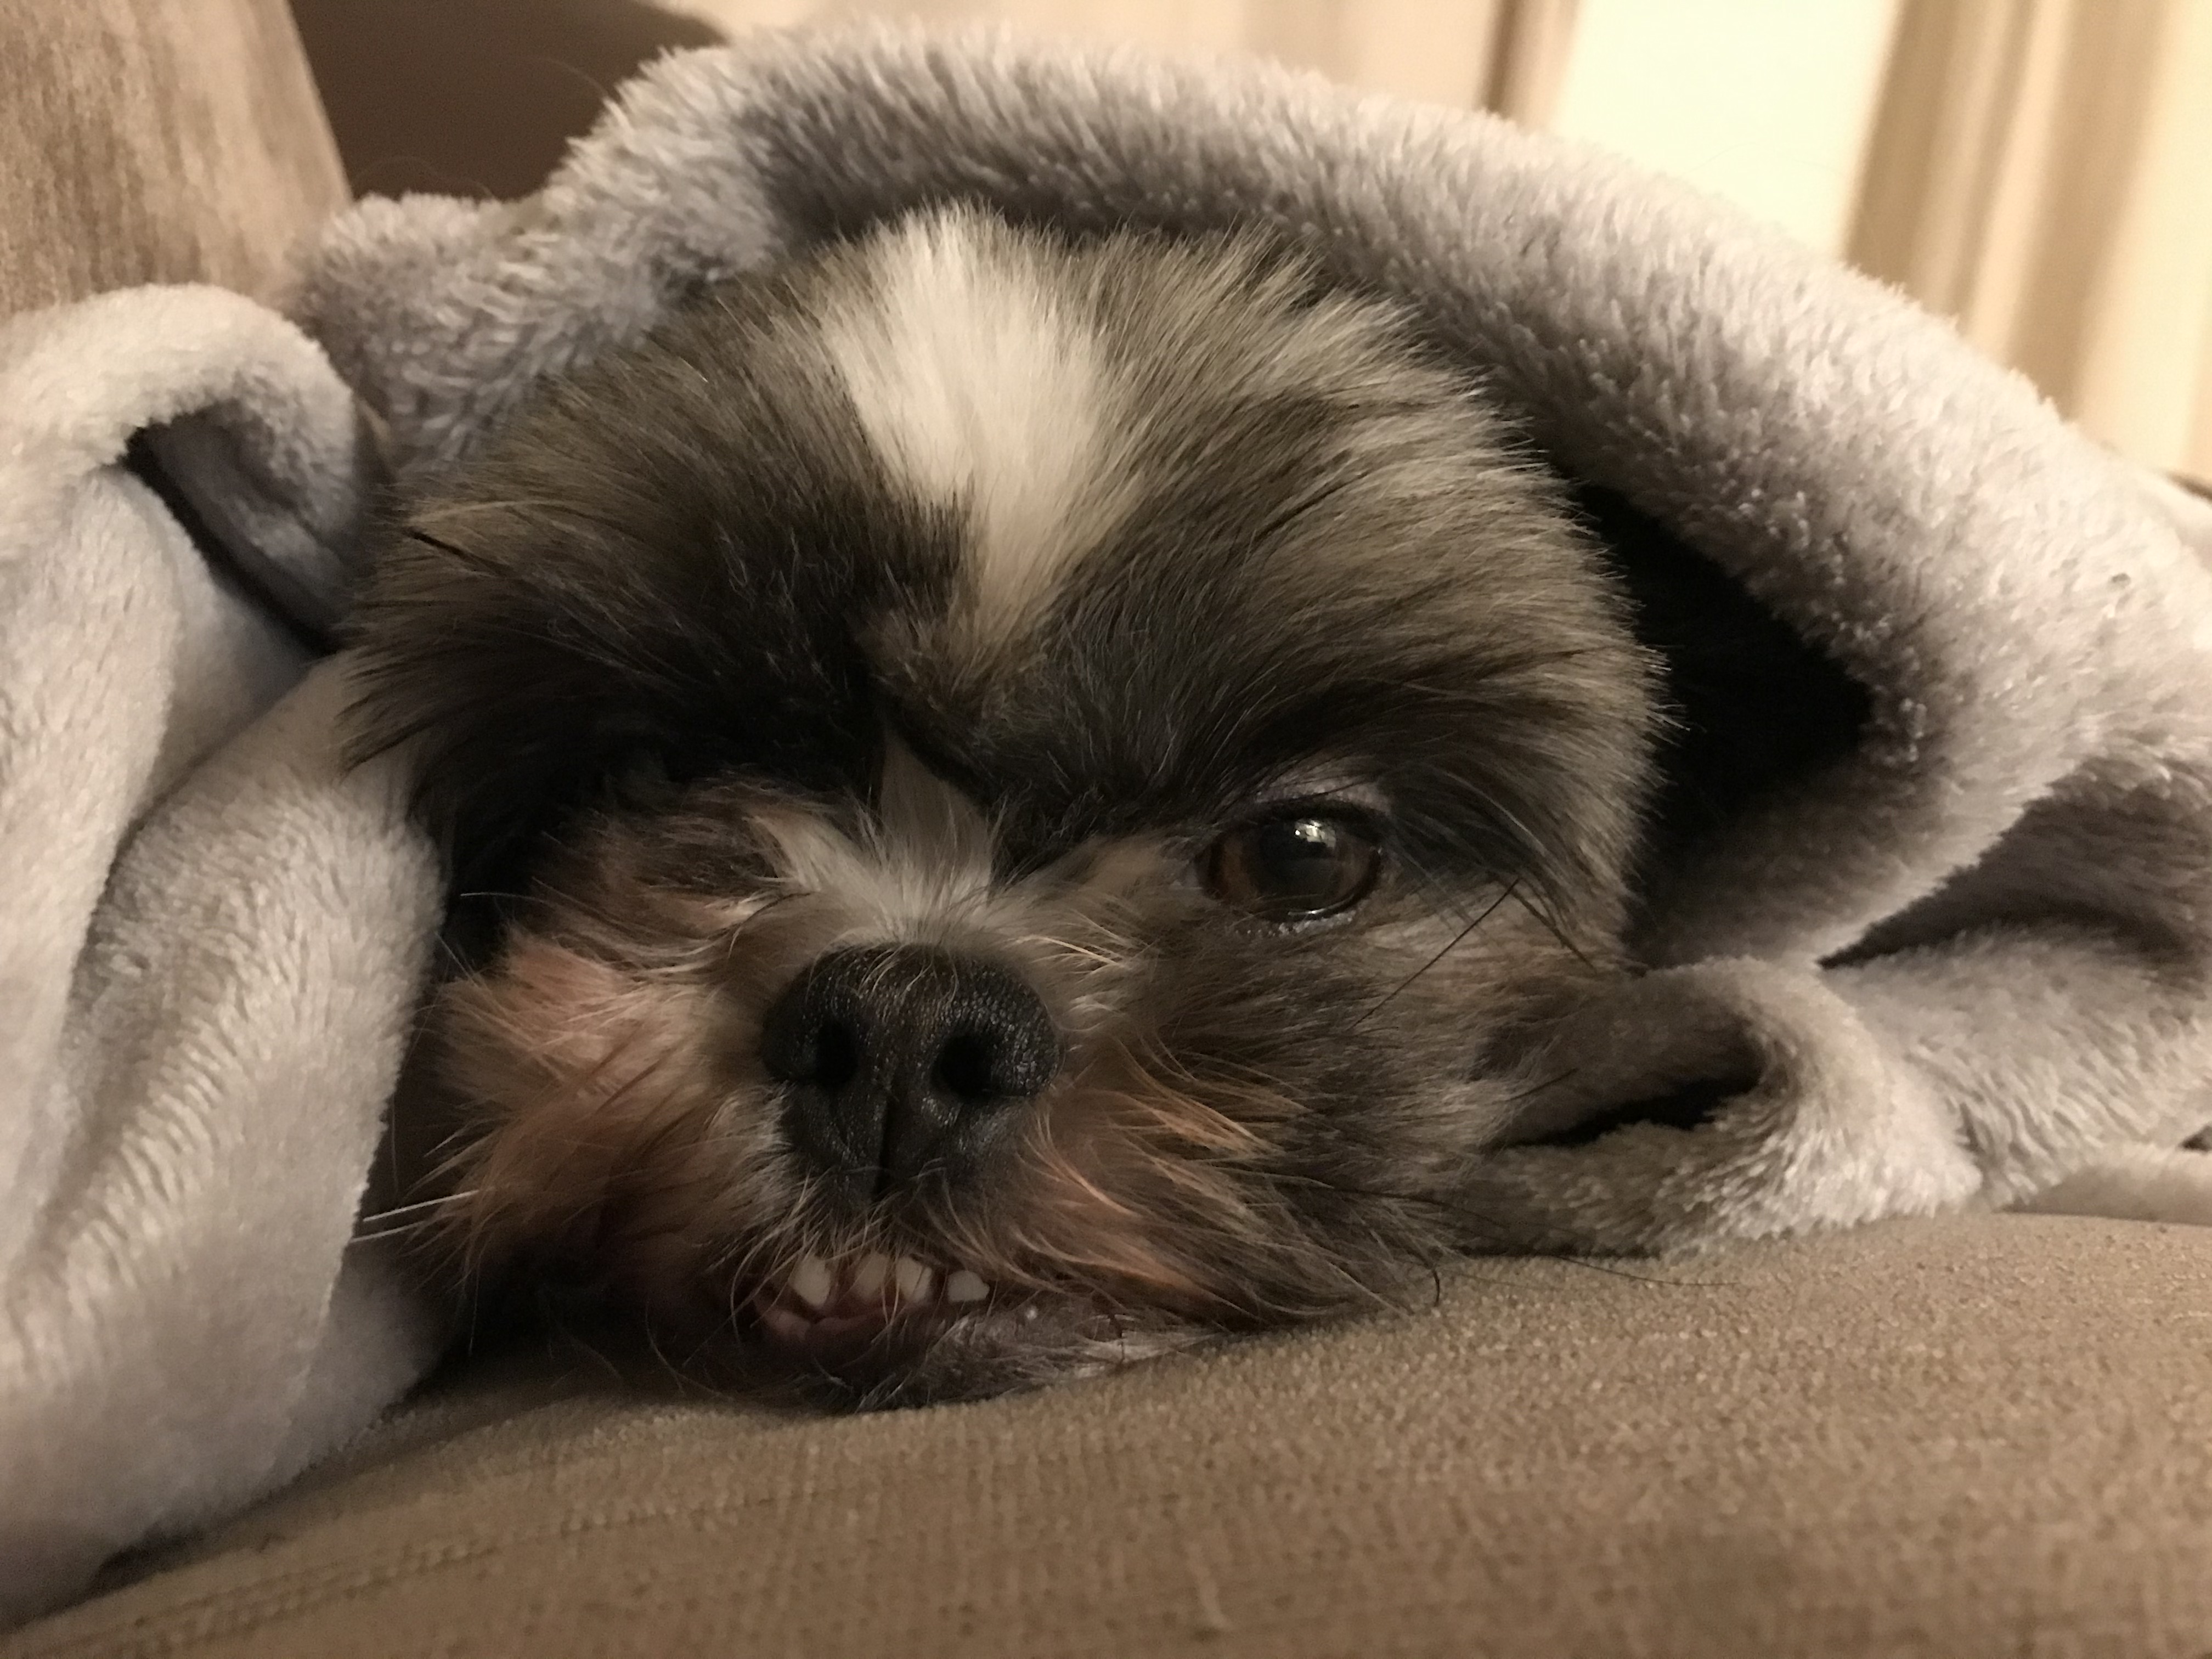 Mable Snuggled Under Blanket